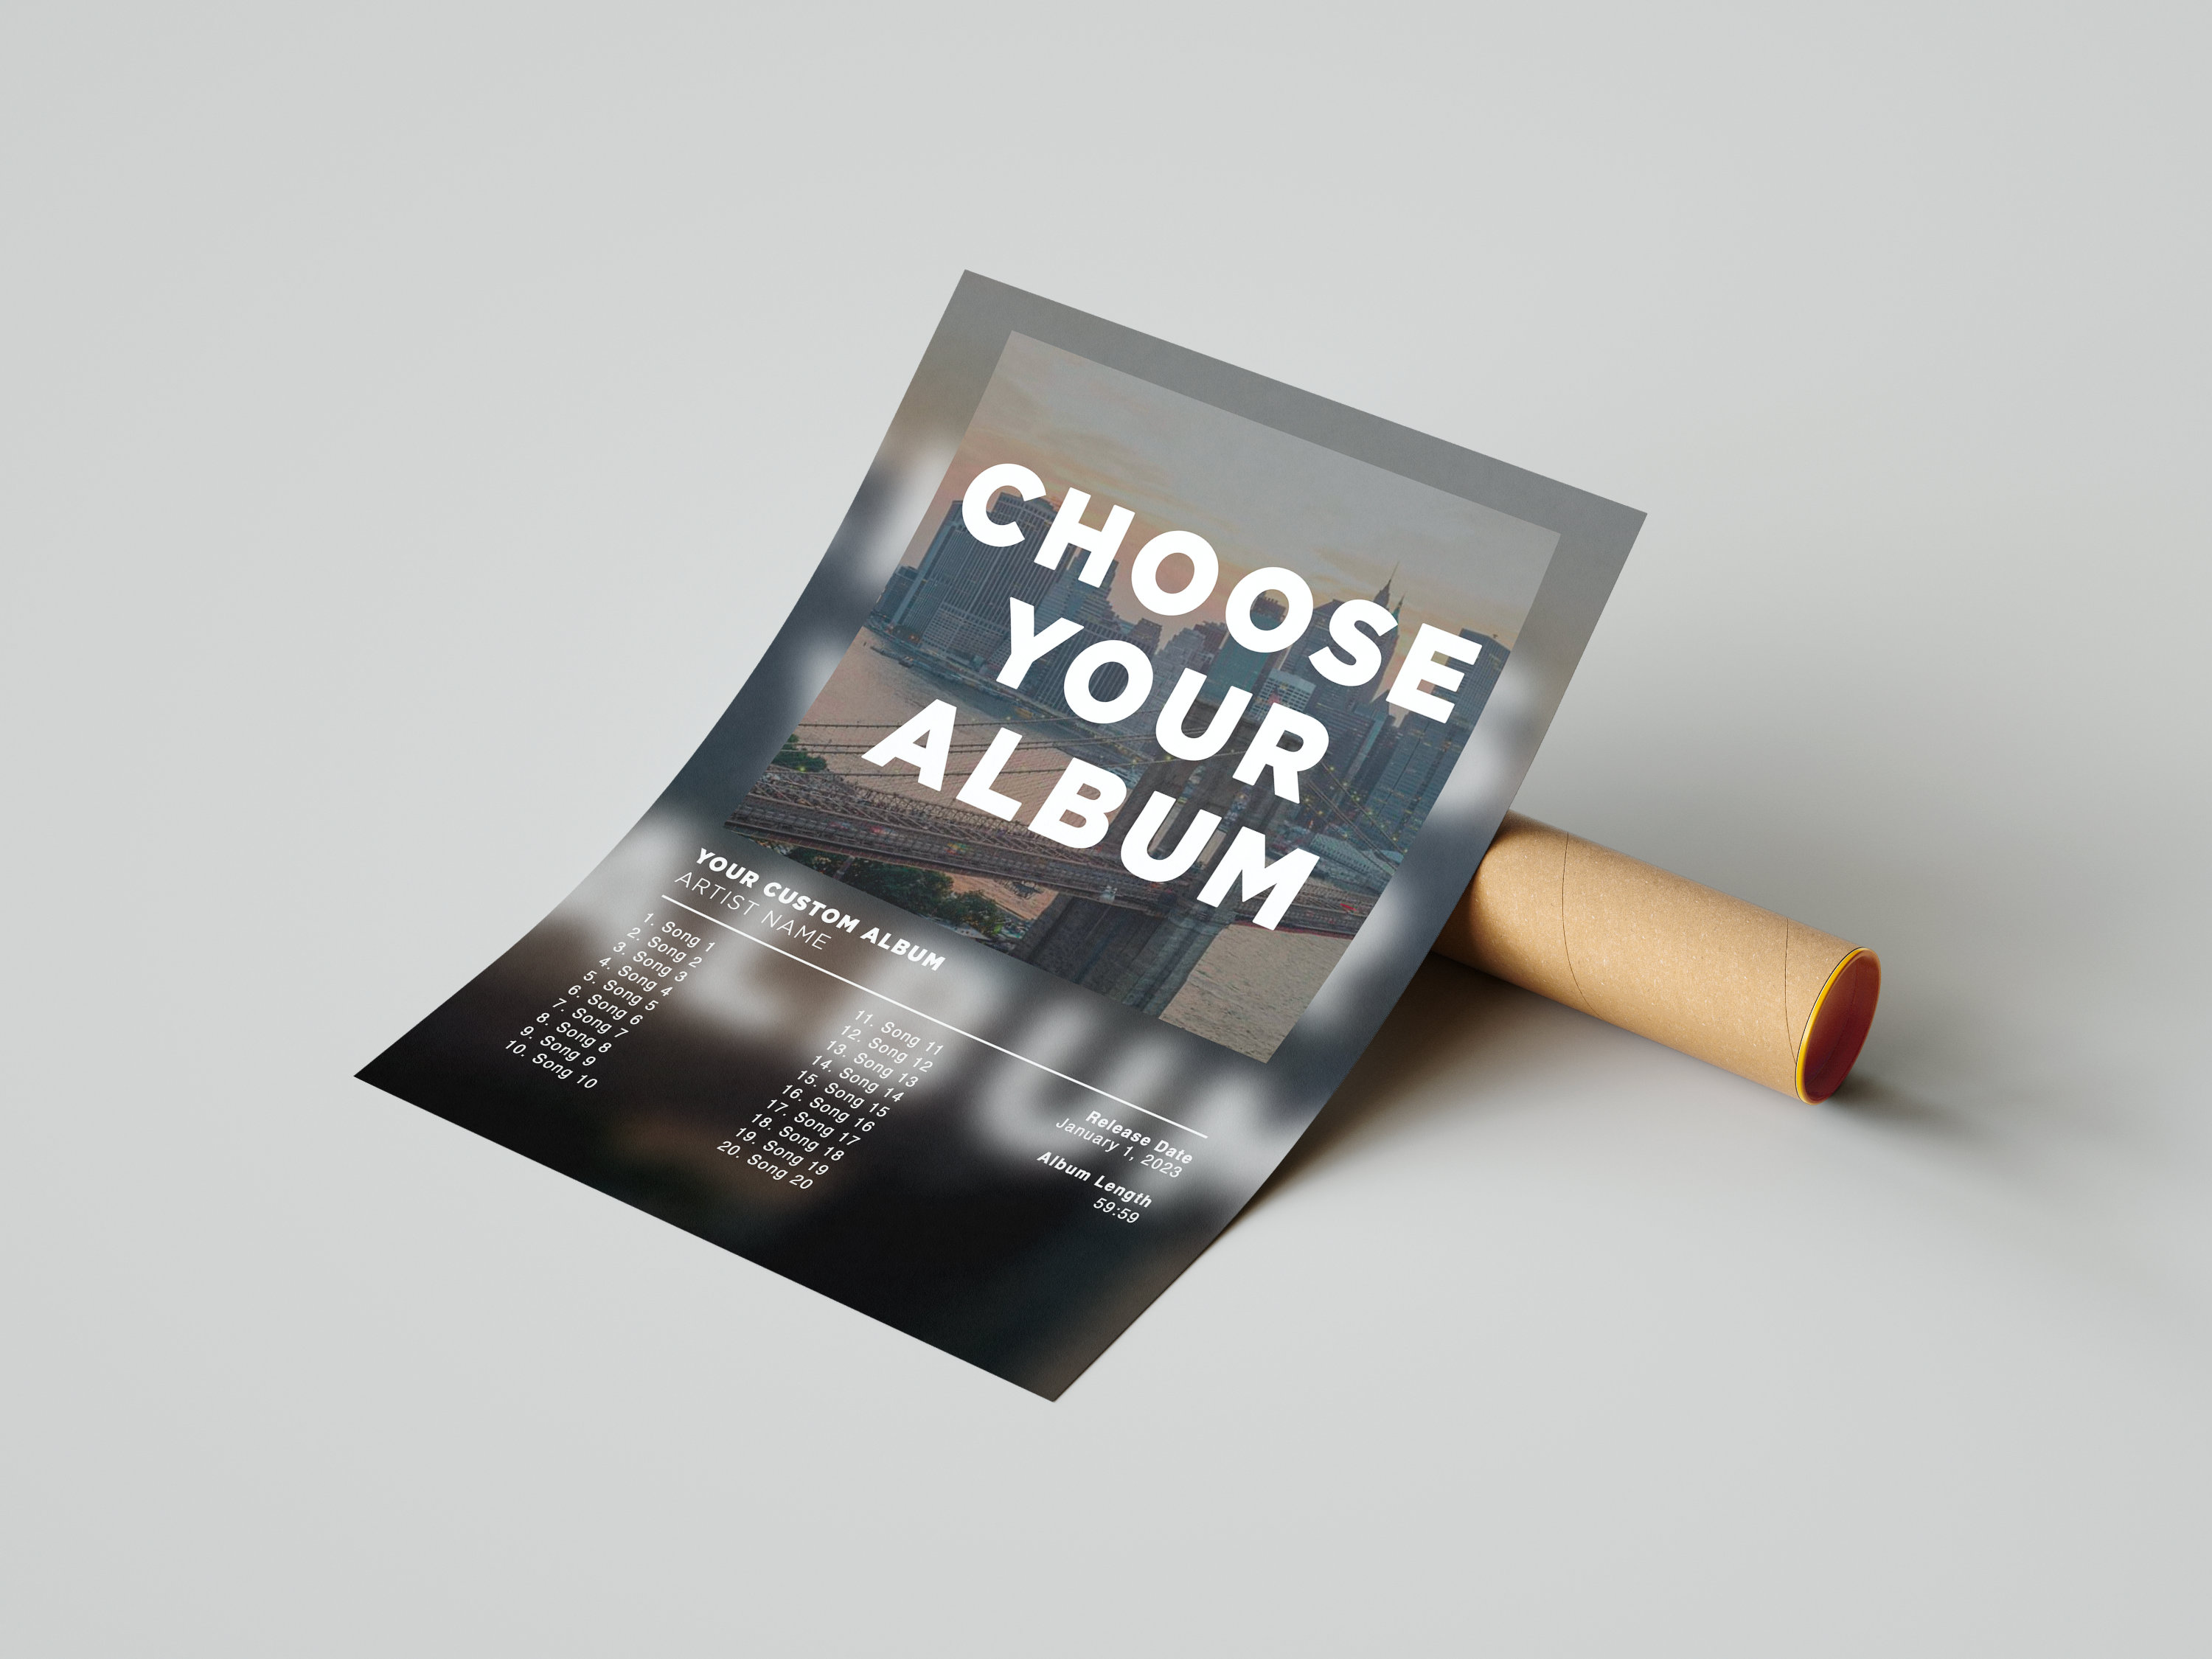 Custom Album Poster, Custom Album Cover Poster, Custom Album Poster